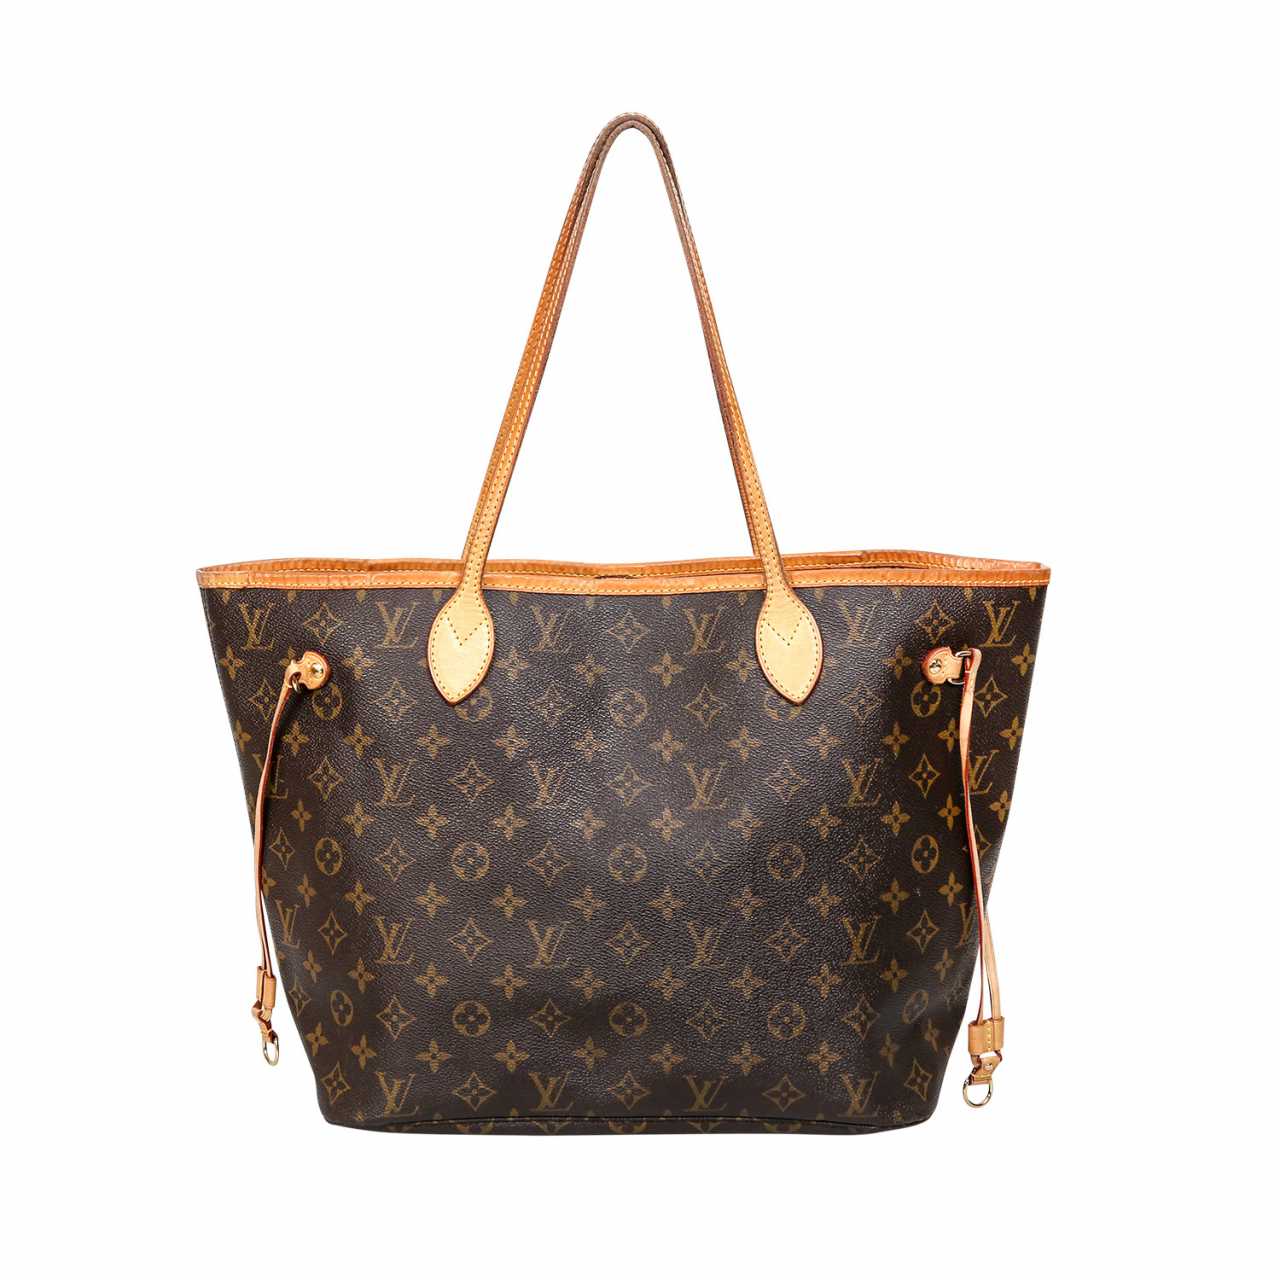 Louis Vuitton Malaysia Online / Second hand Louis Vuitton handbags